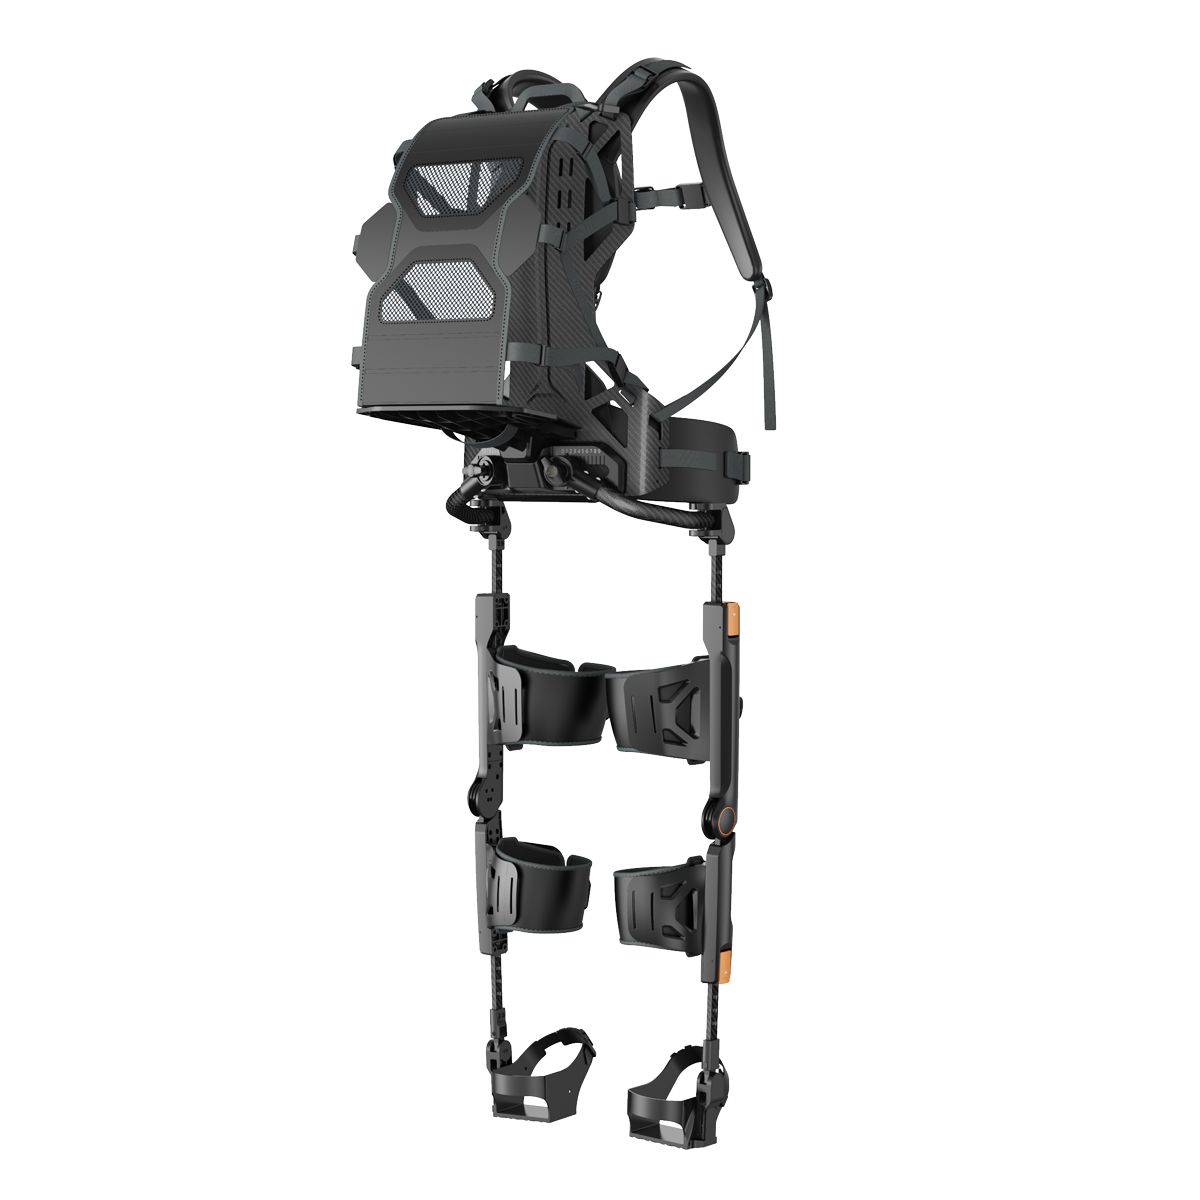 Load mobile exoskeleton